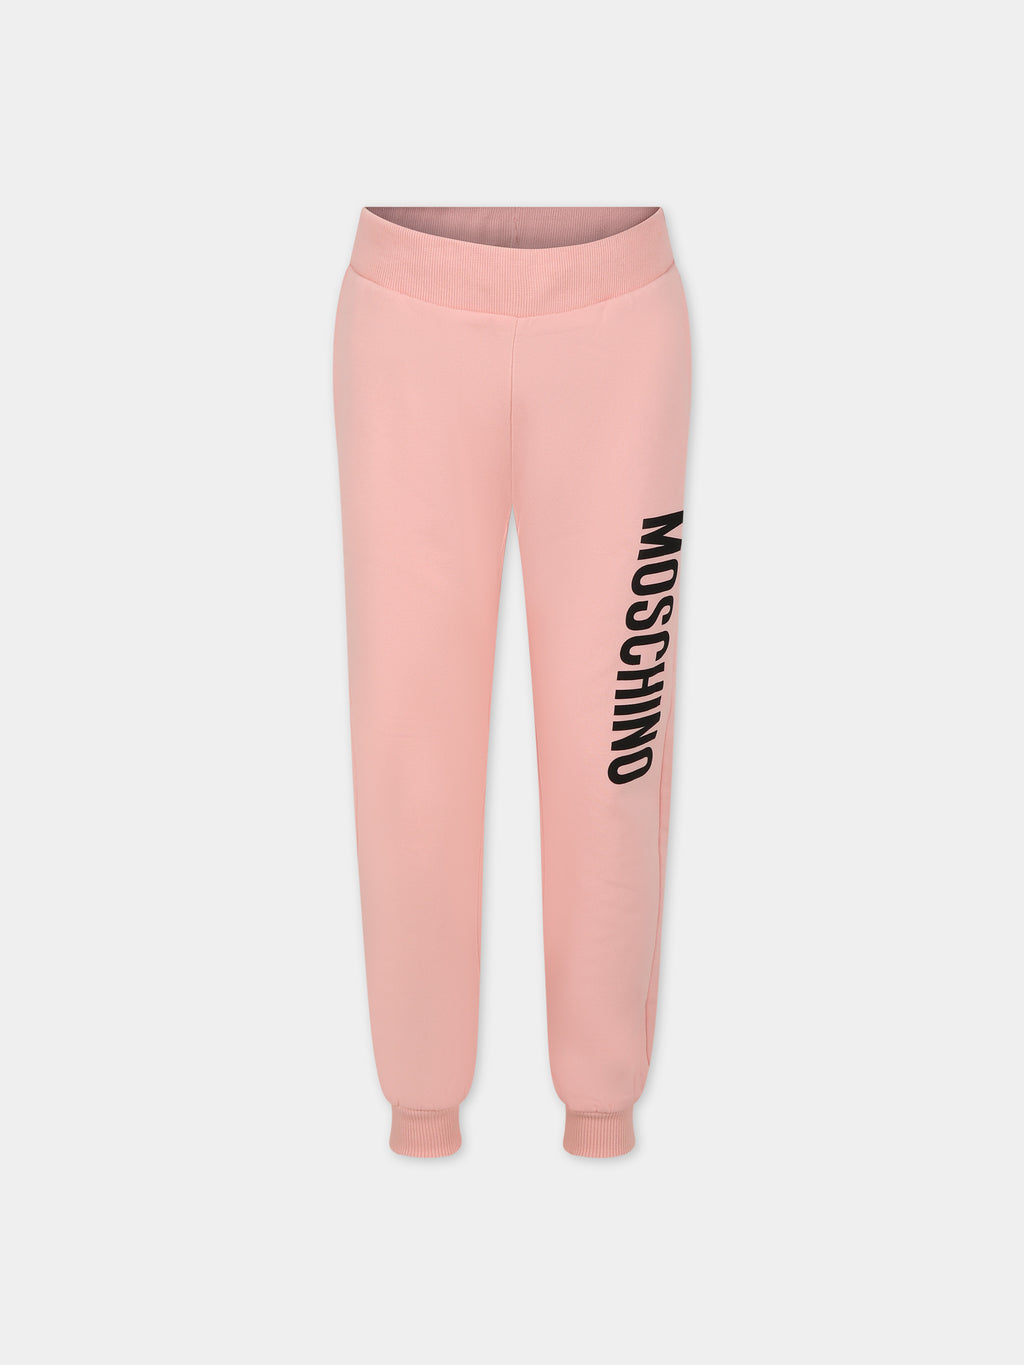 Pantalon rose pour fille avec logo